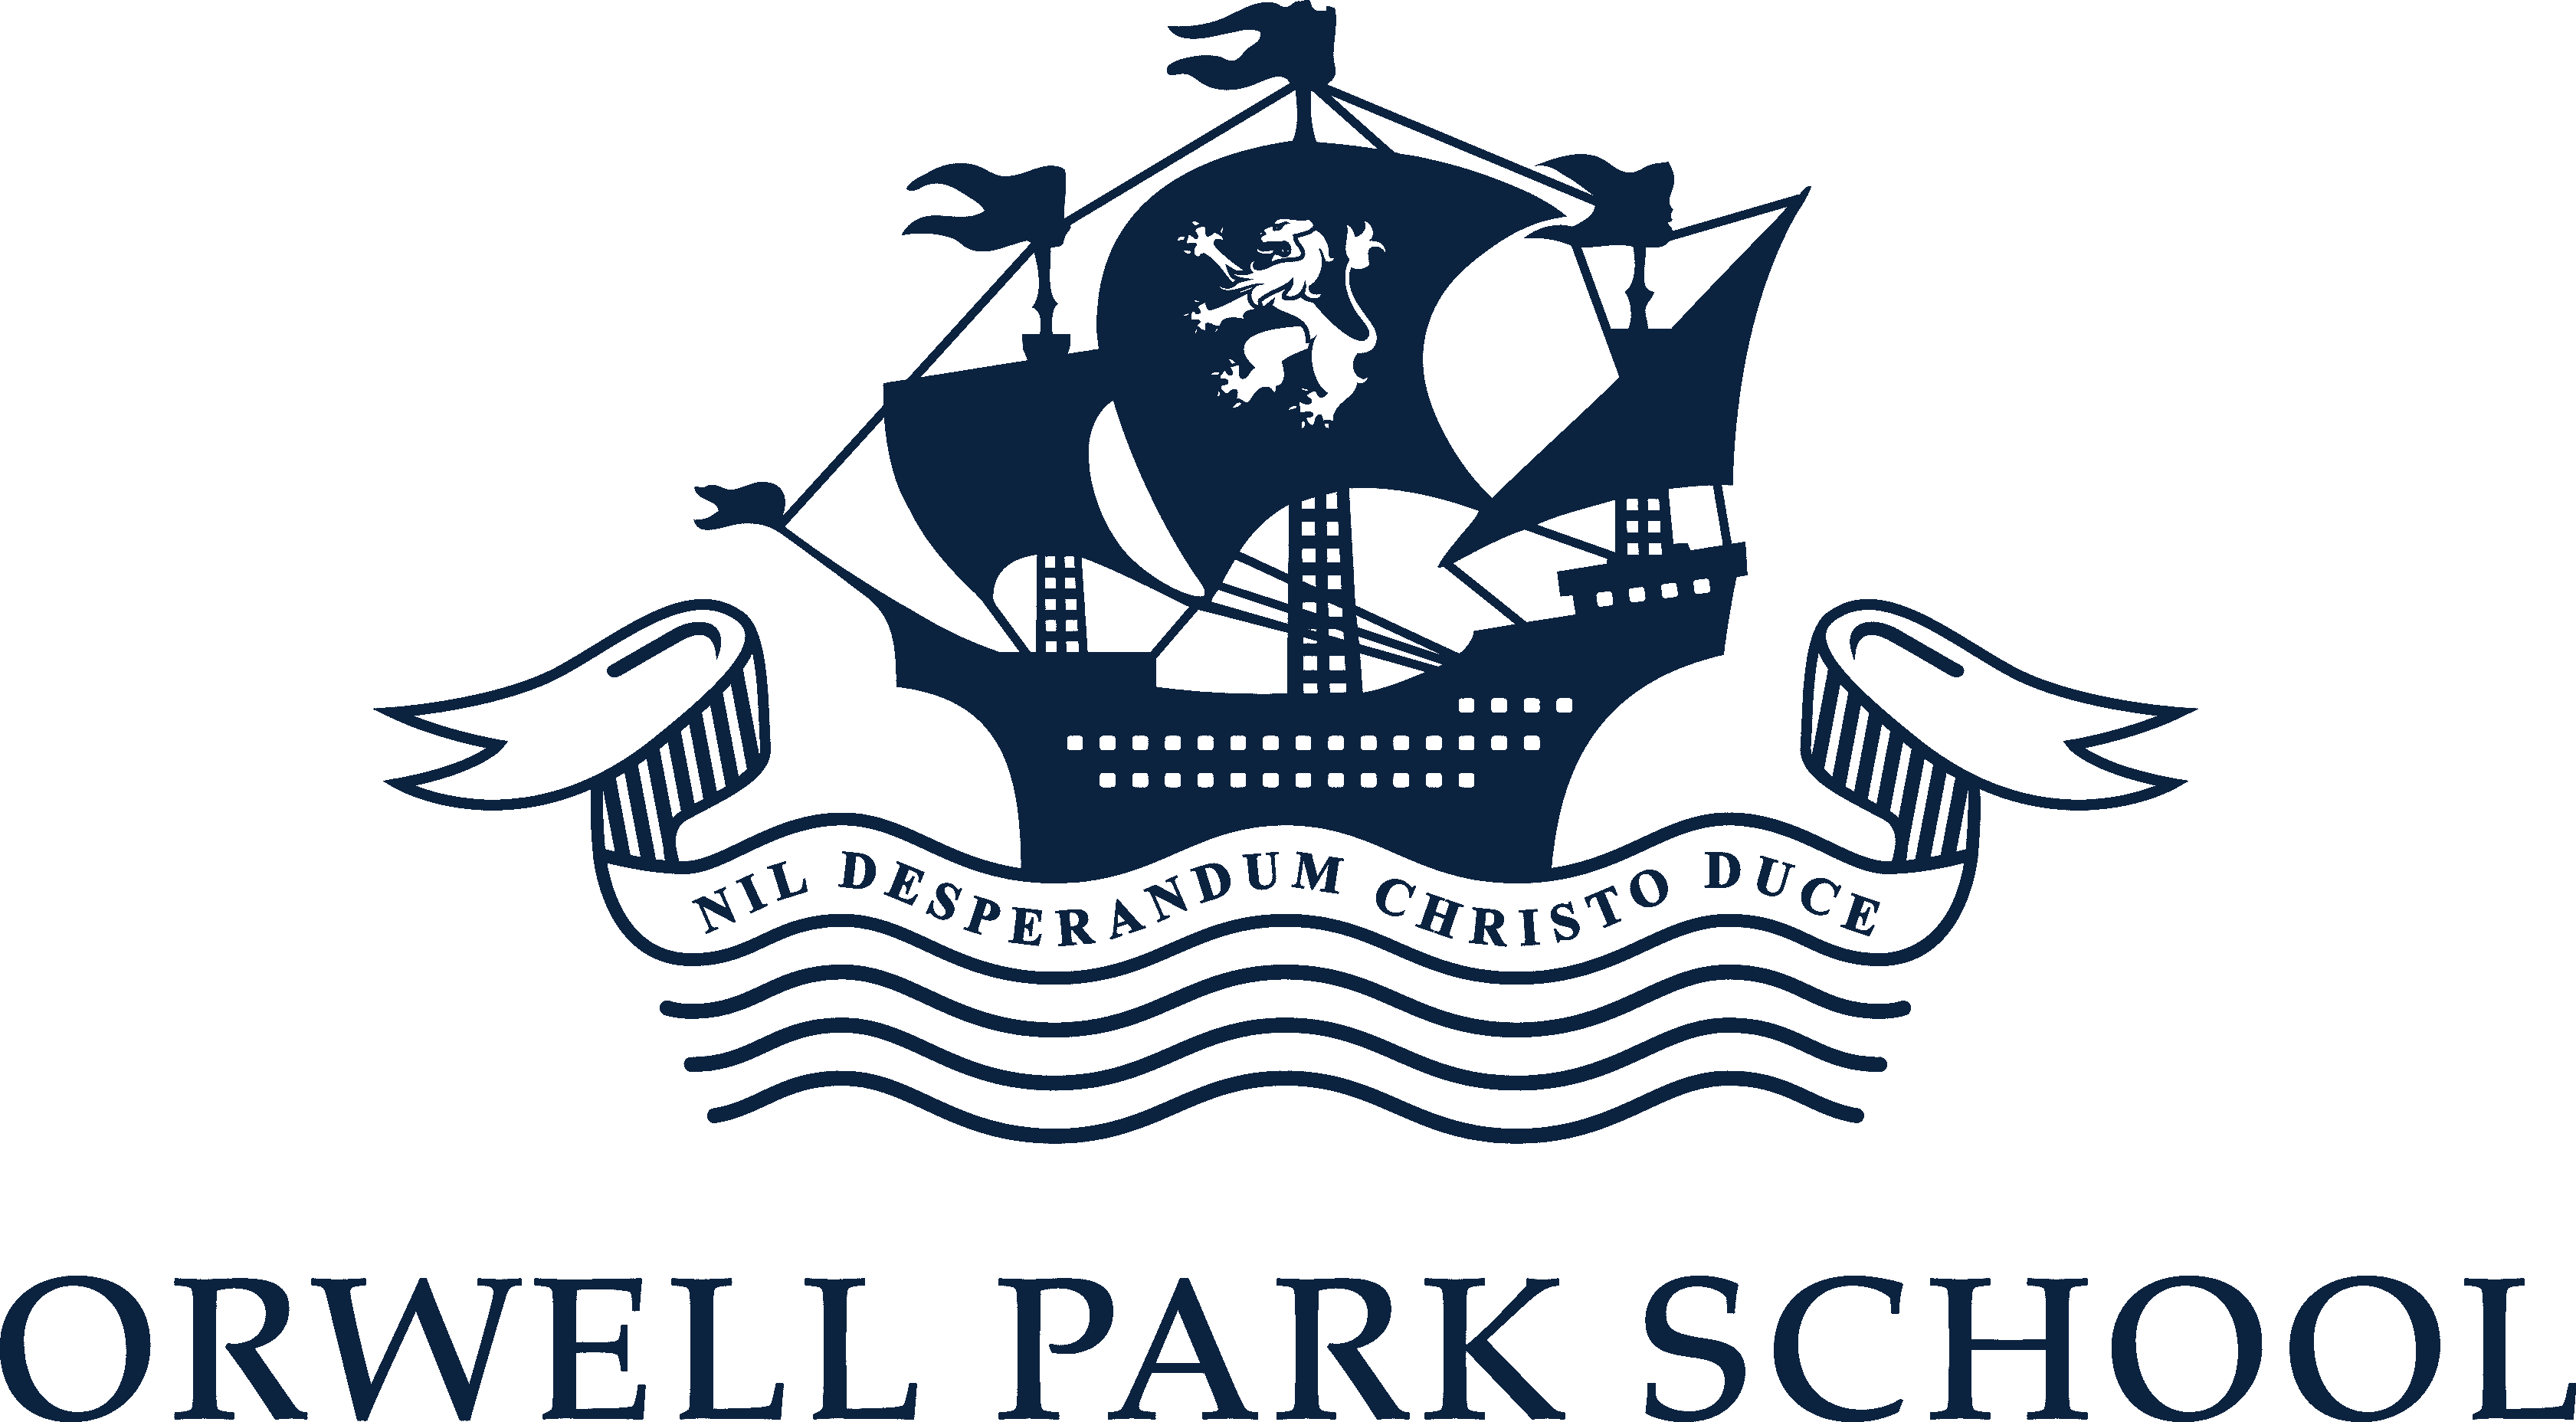 The Orwell Park School Foundation logo